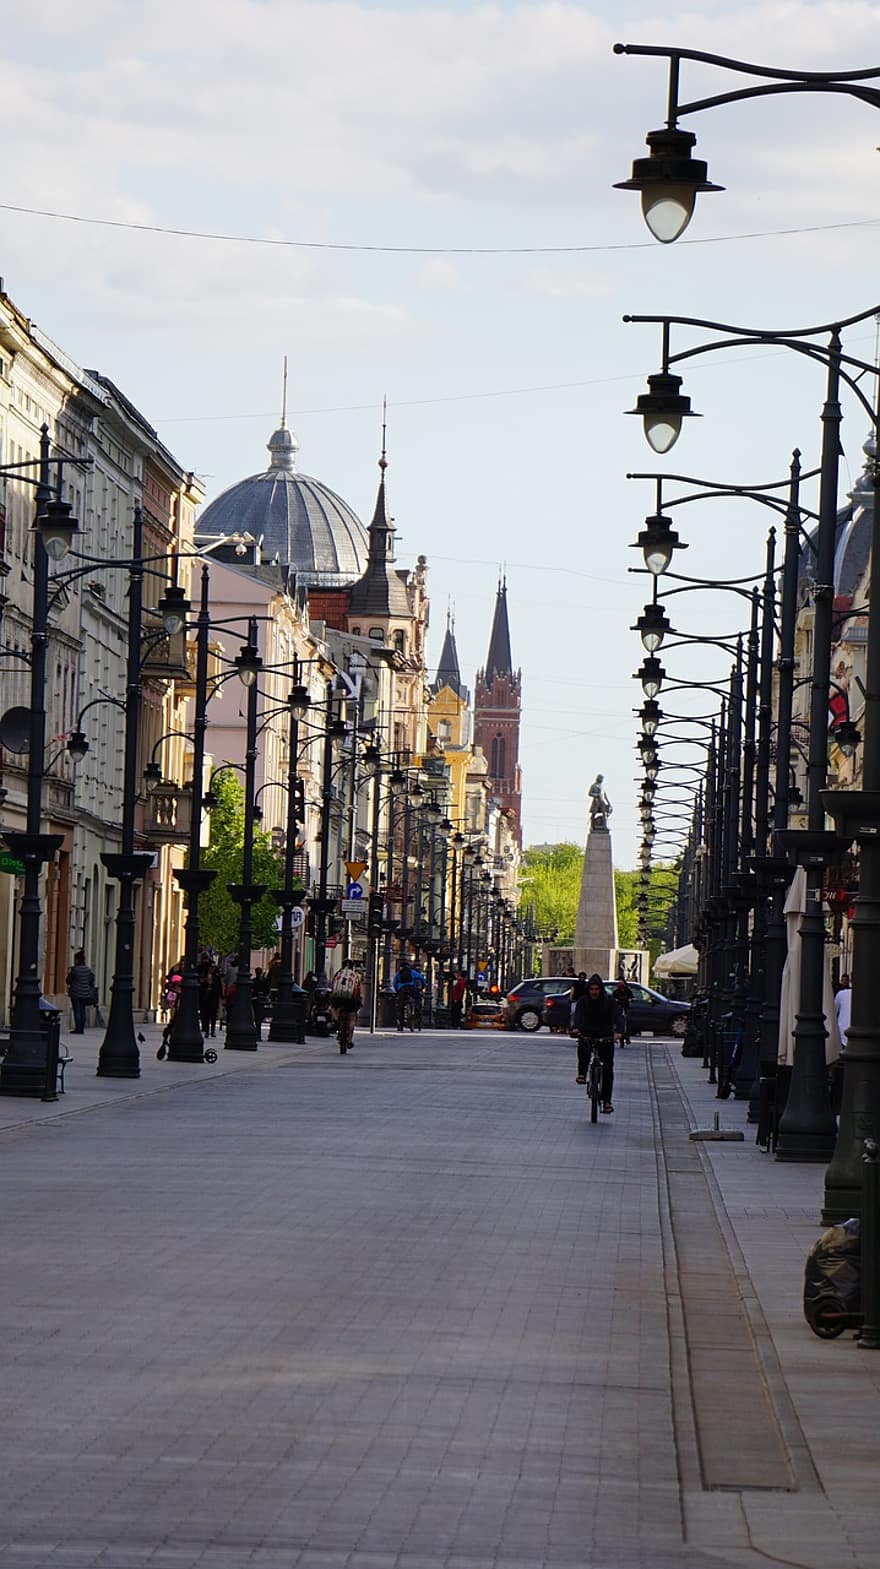 Piotrkowska, Street, City, Street Lights, Street Lamps, Cyclist, People, Commuters, Street Photography, łódź, Buildings